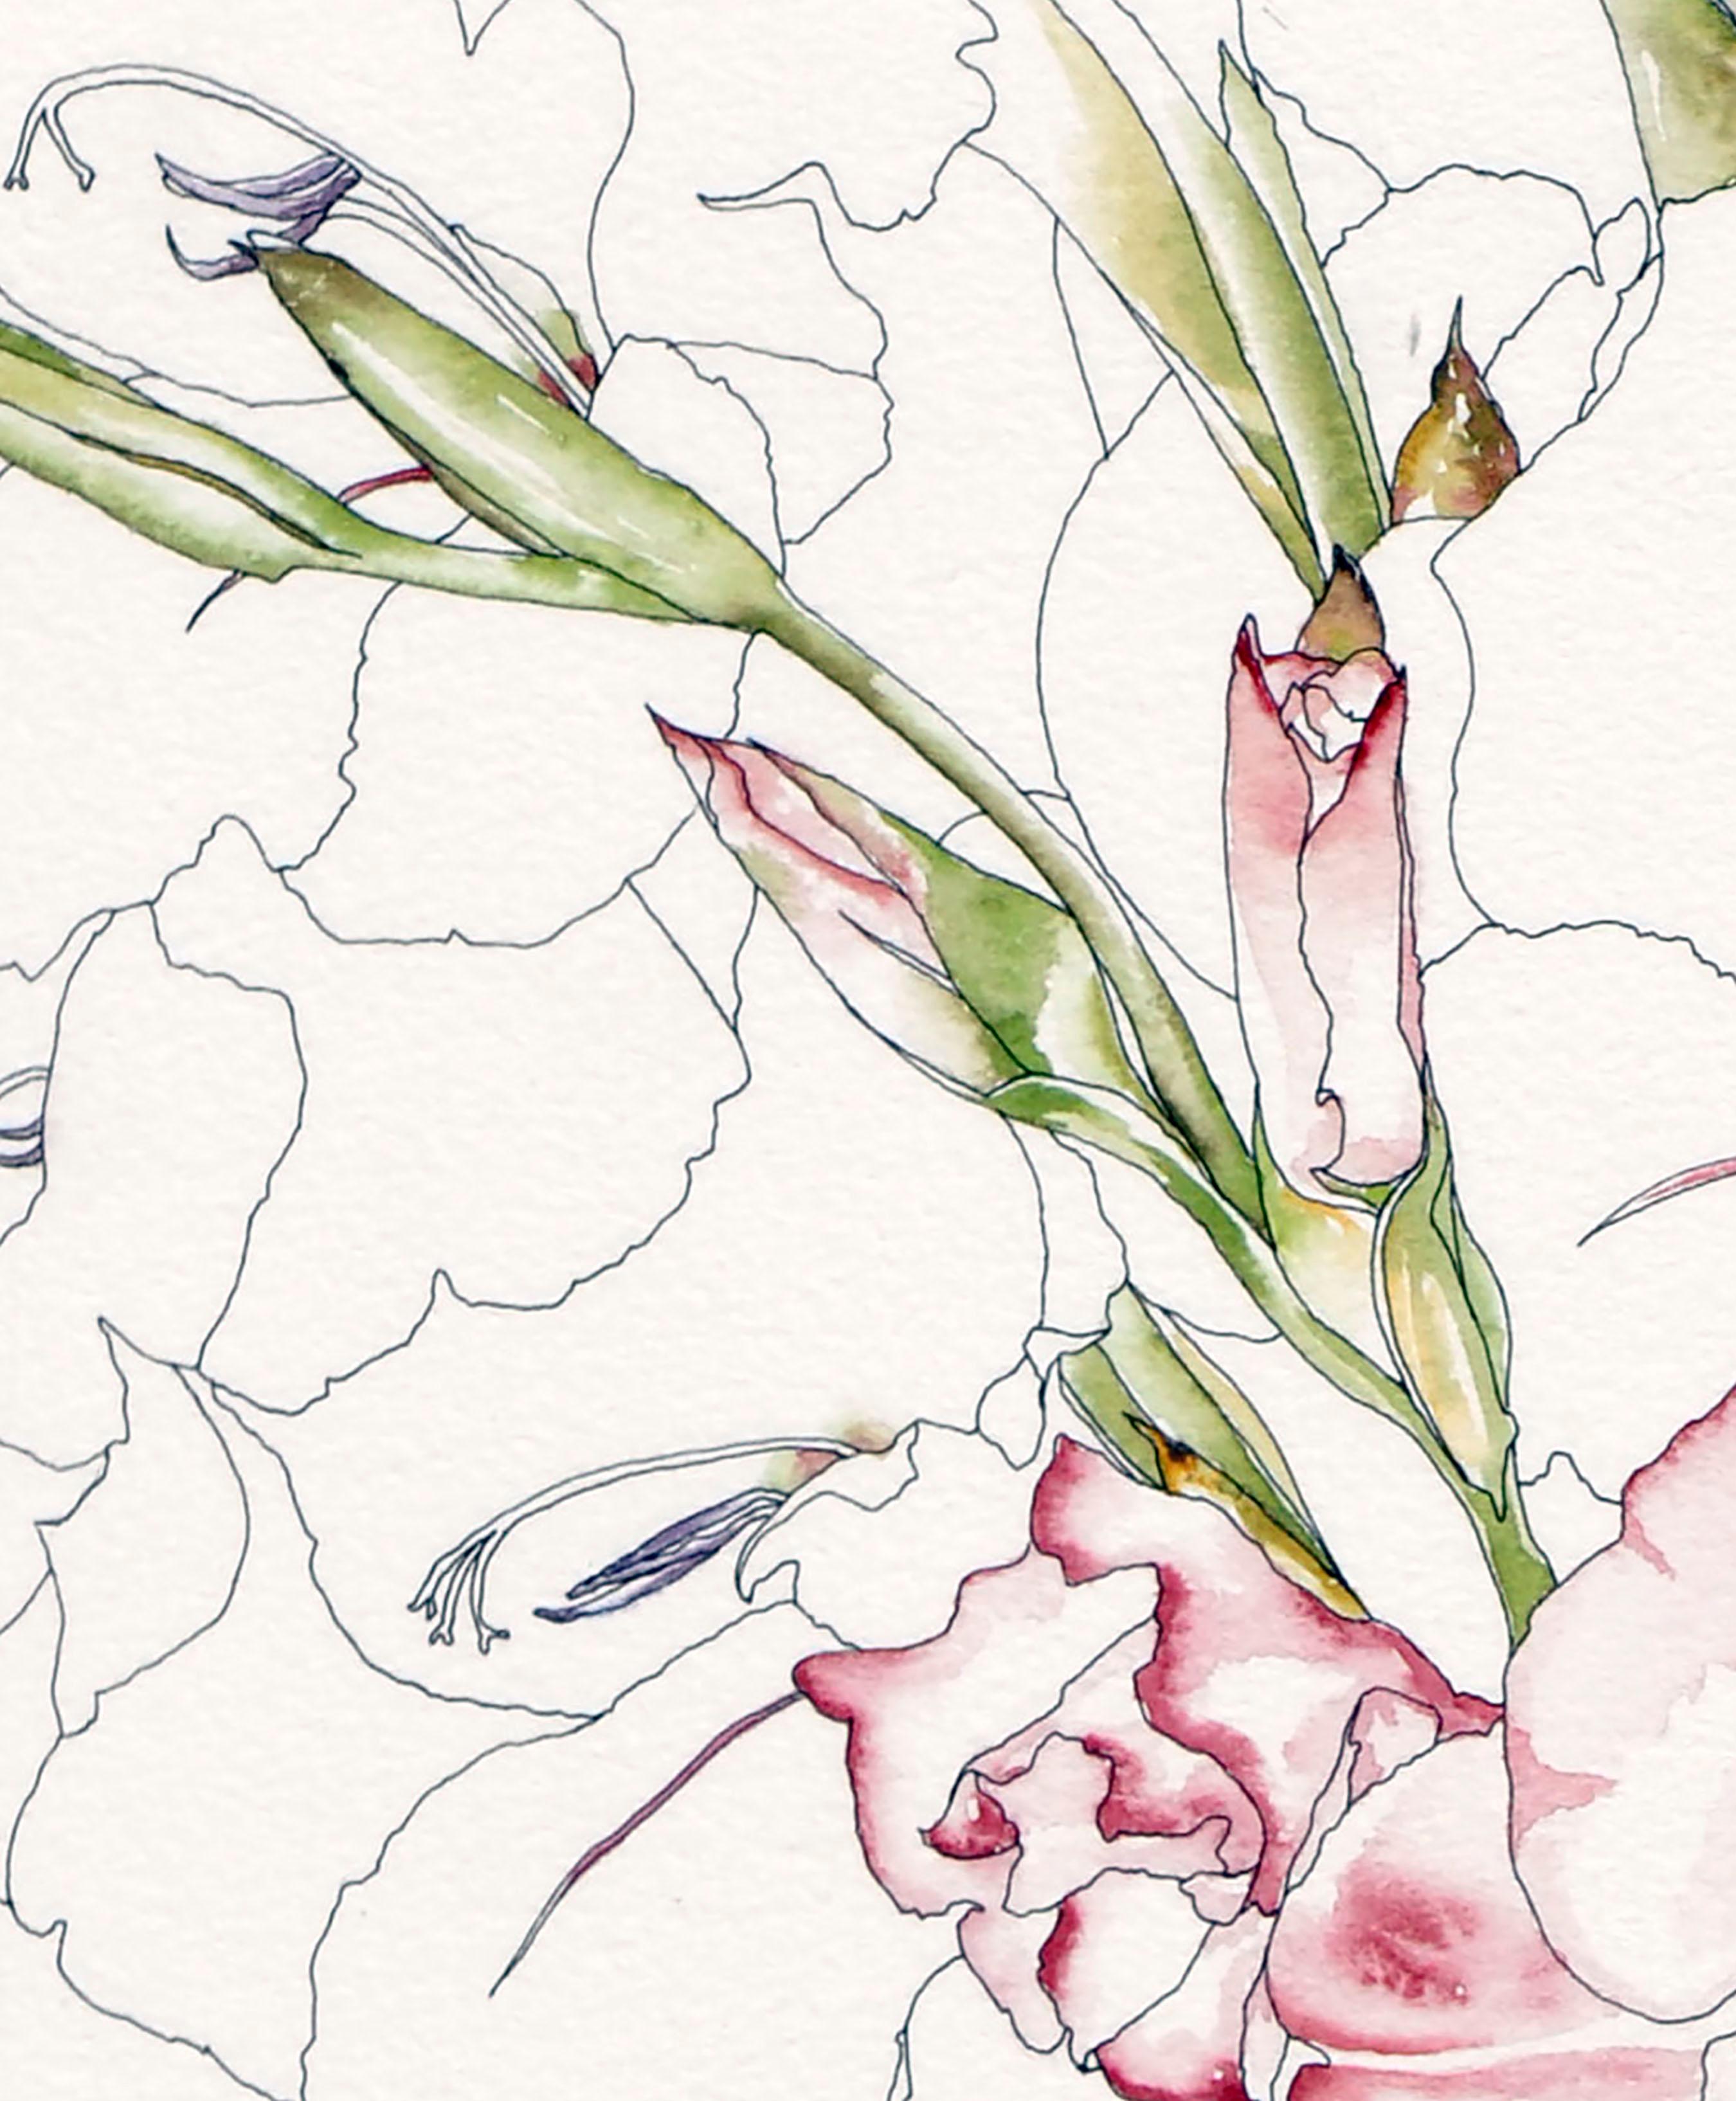 Begonia - Botanical Study  - American Realist Art by Deborah Eddy